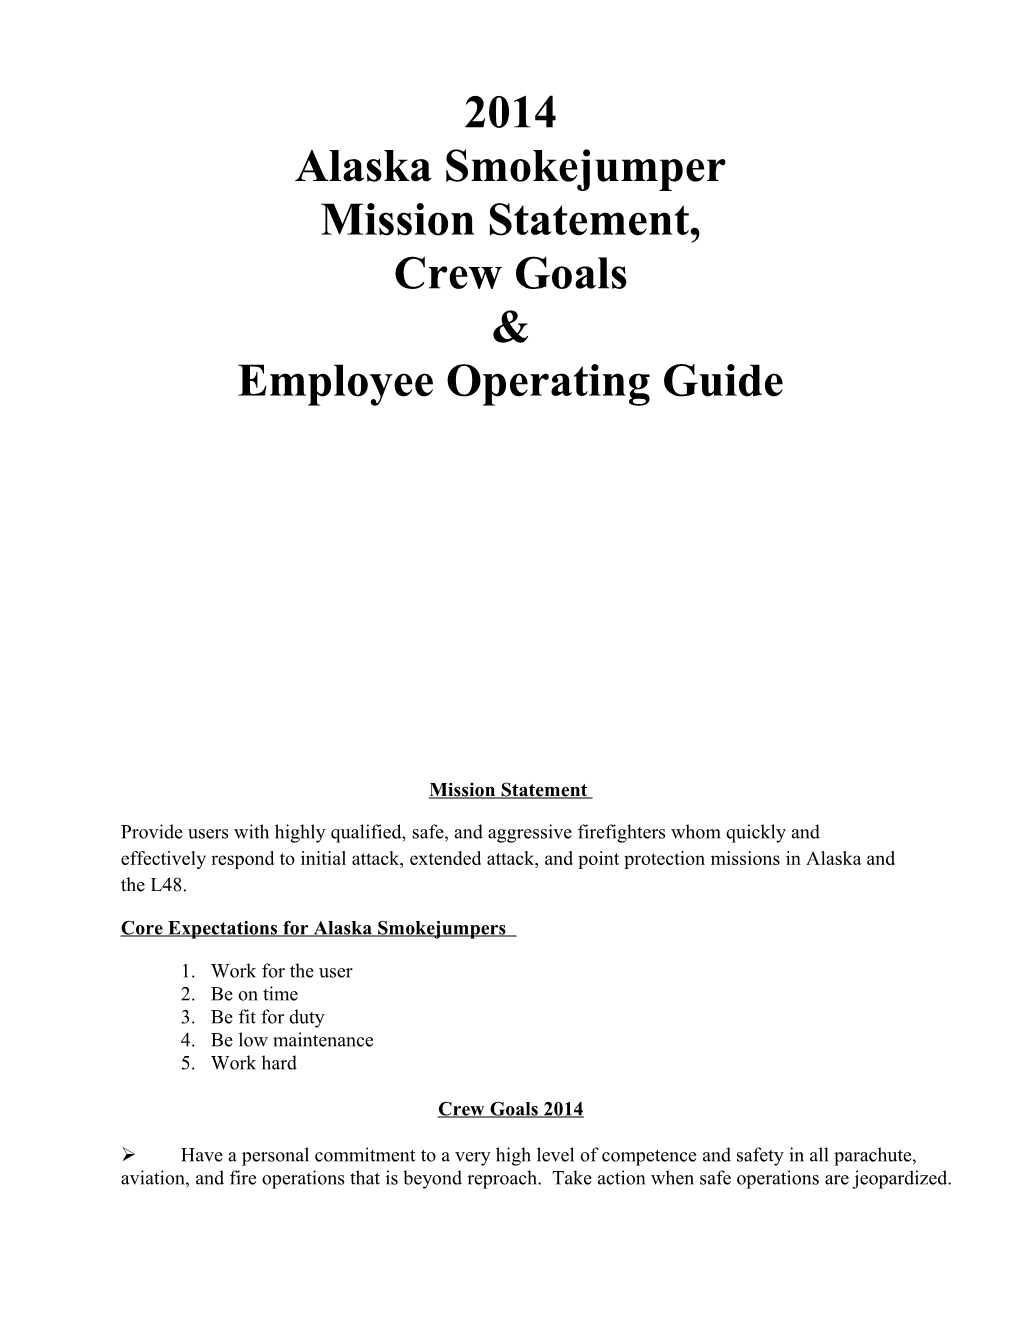 Alaska Smokejumper